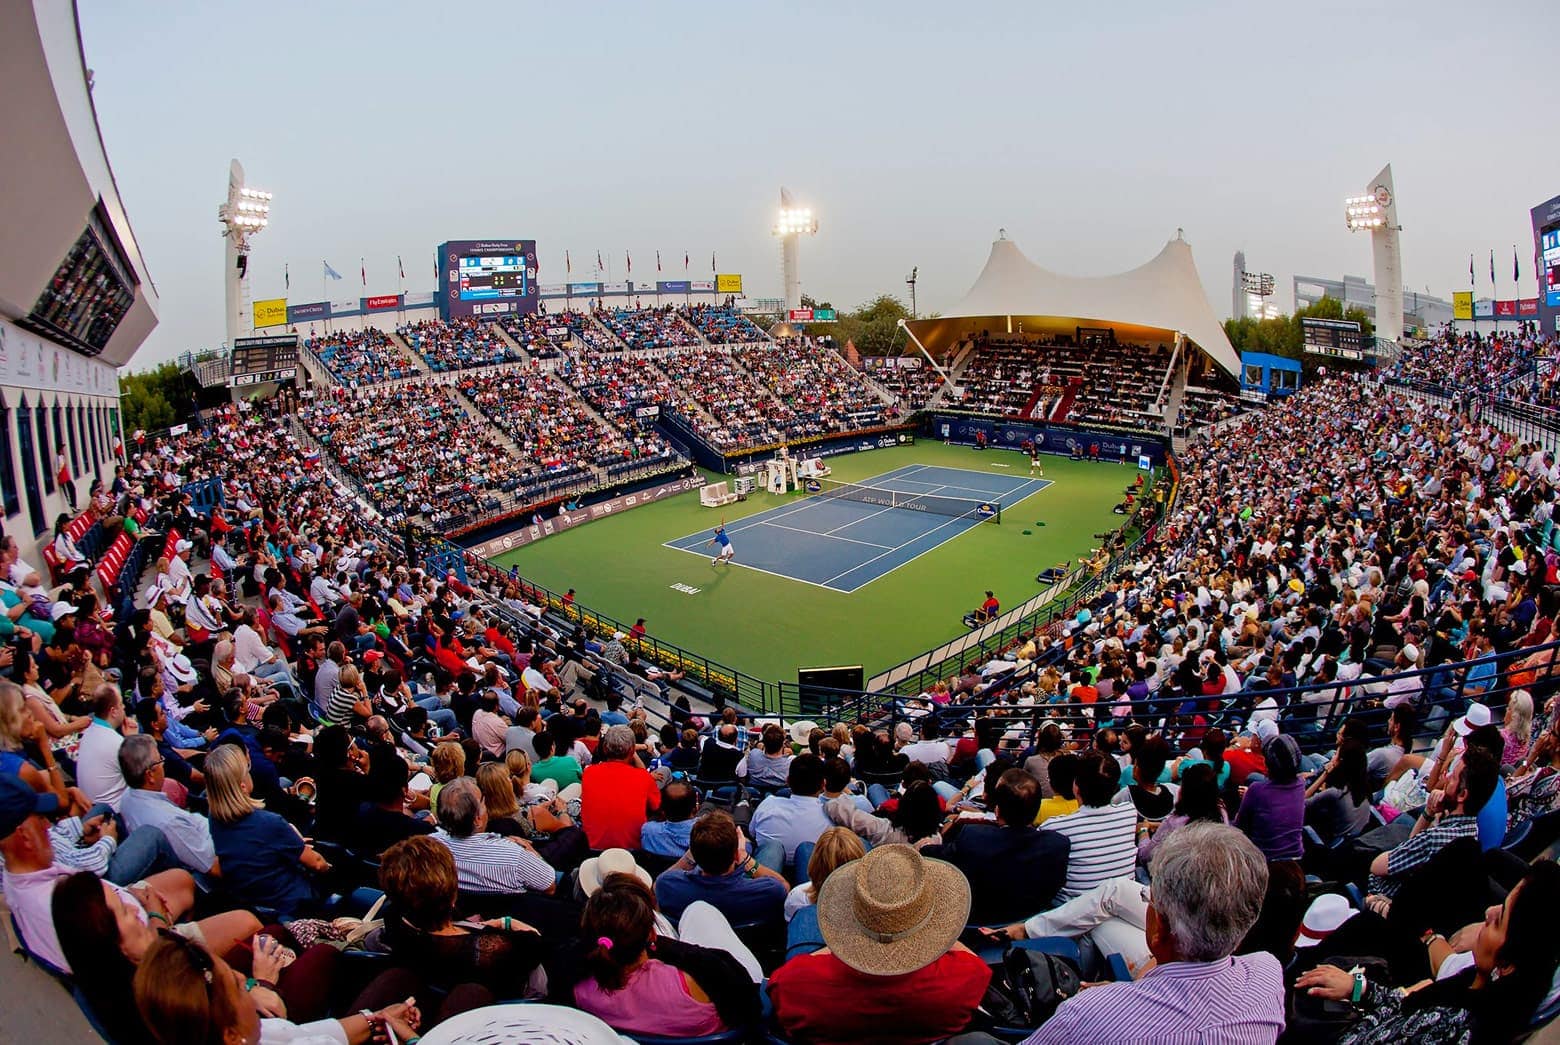 Dubai Duty Free Tennis Championships Visit Dubai